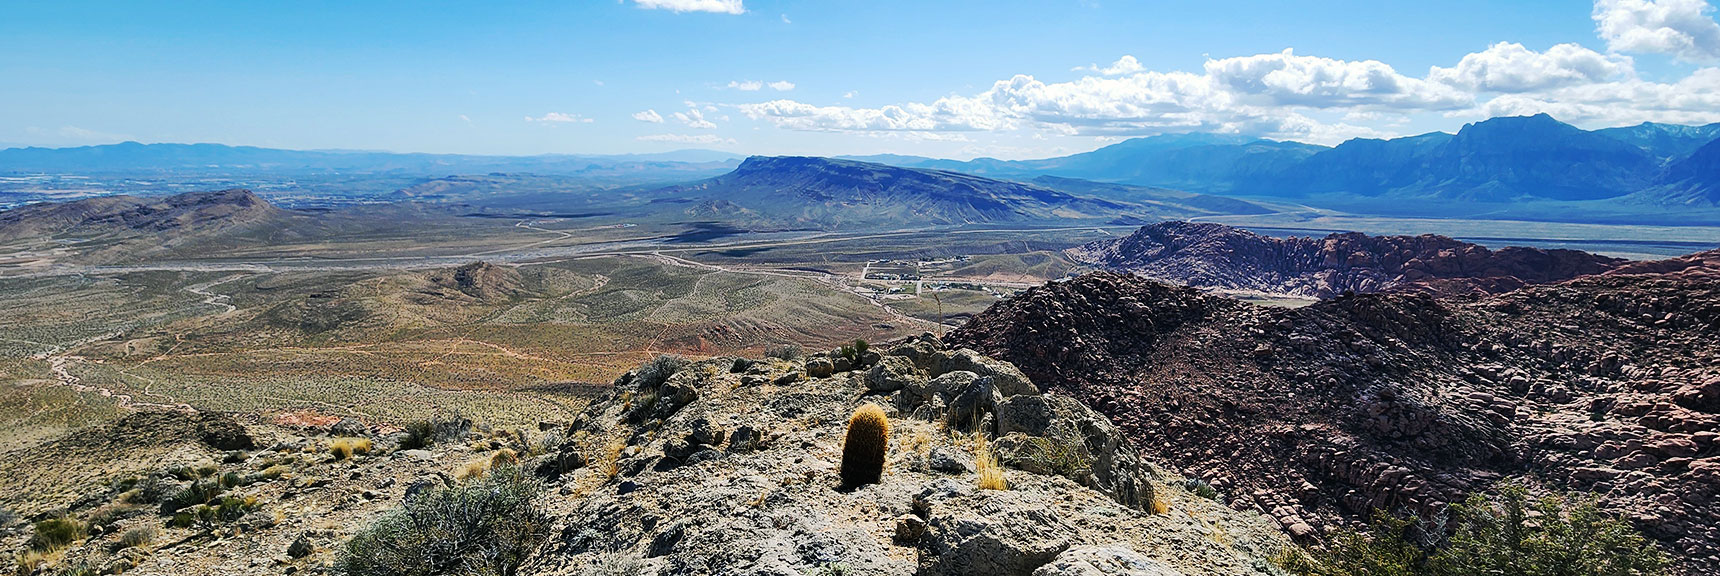 Calico Basin and Blue Diamond Hill Below. Rainbow Mts. on Right Horizon | Gray Cap Ridge Southeast Summit | La Madre Mountains Wilderness, Nevada